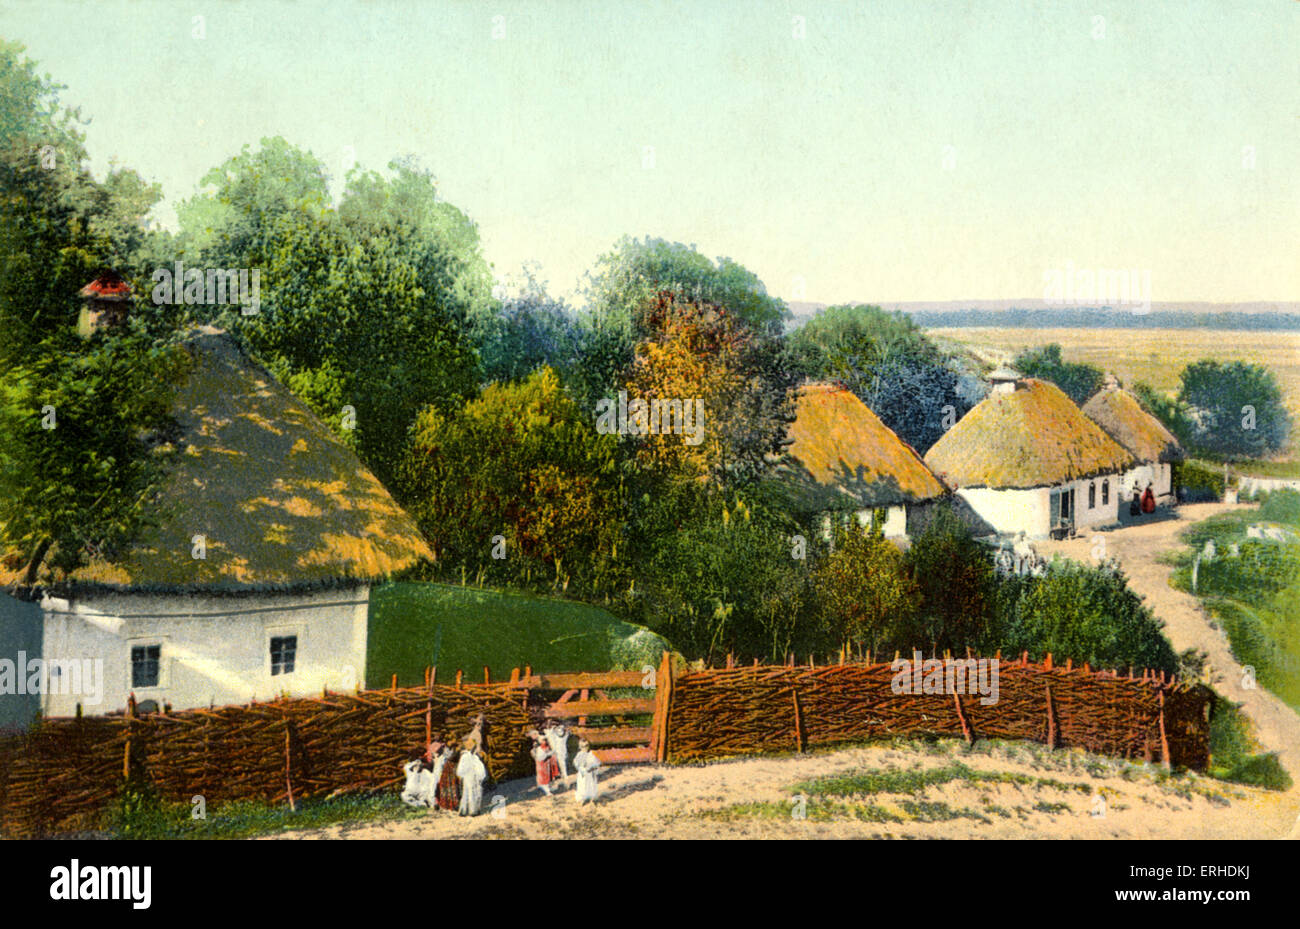 Aldea ucraniana con casas de techos de paja. Pintura postal. Pre-Bolshevik revolución. A principios del siglo XX / Rusia Ucrania. Foto de stock